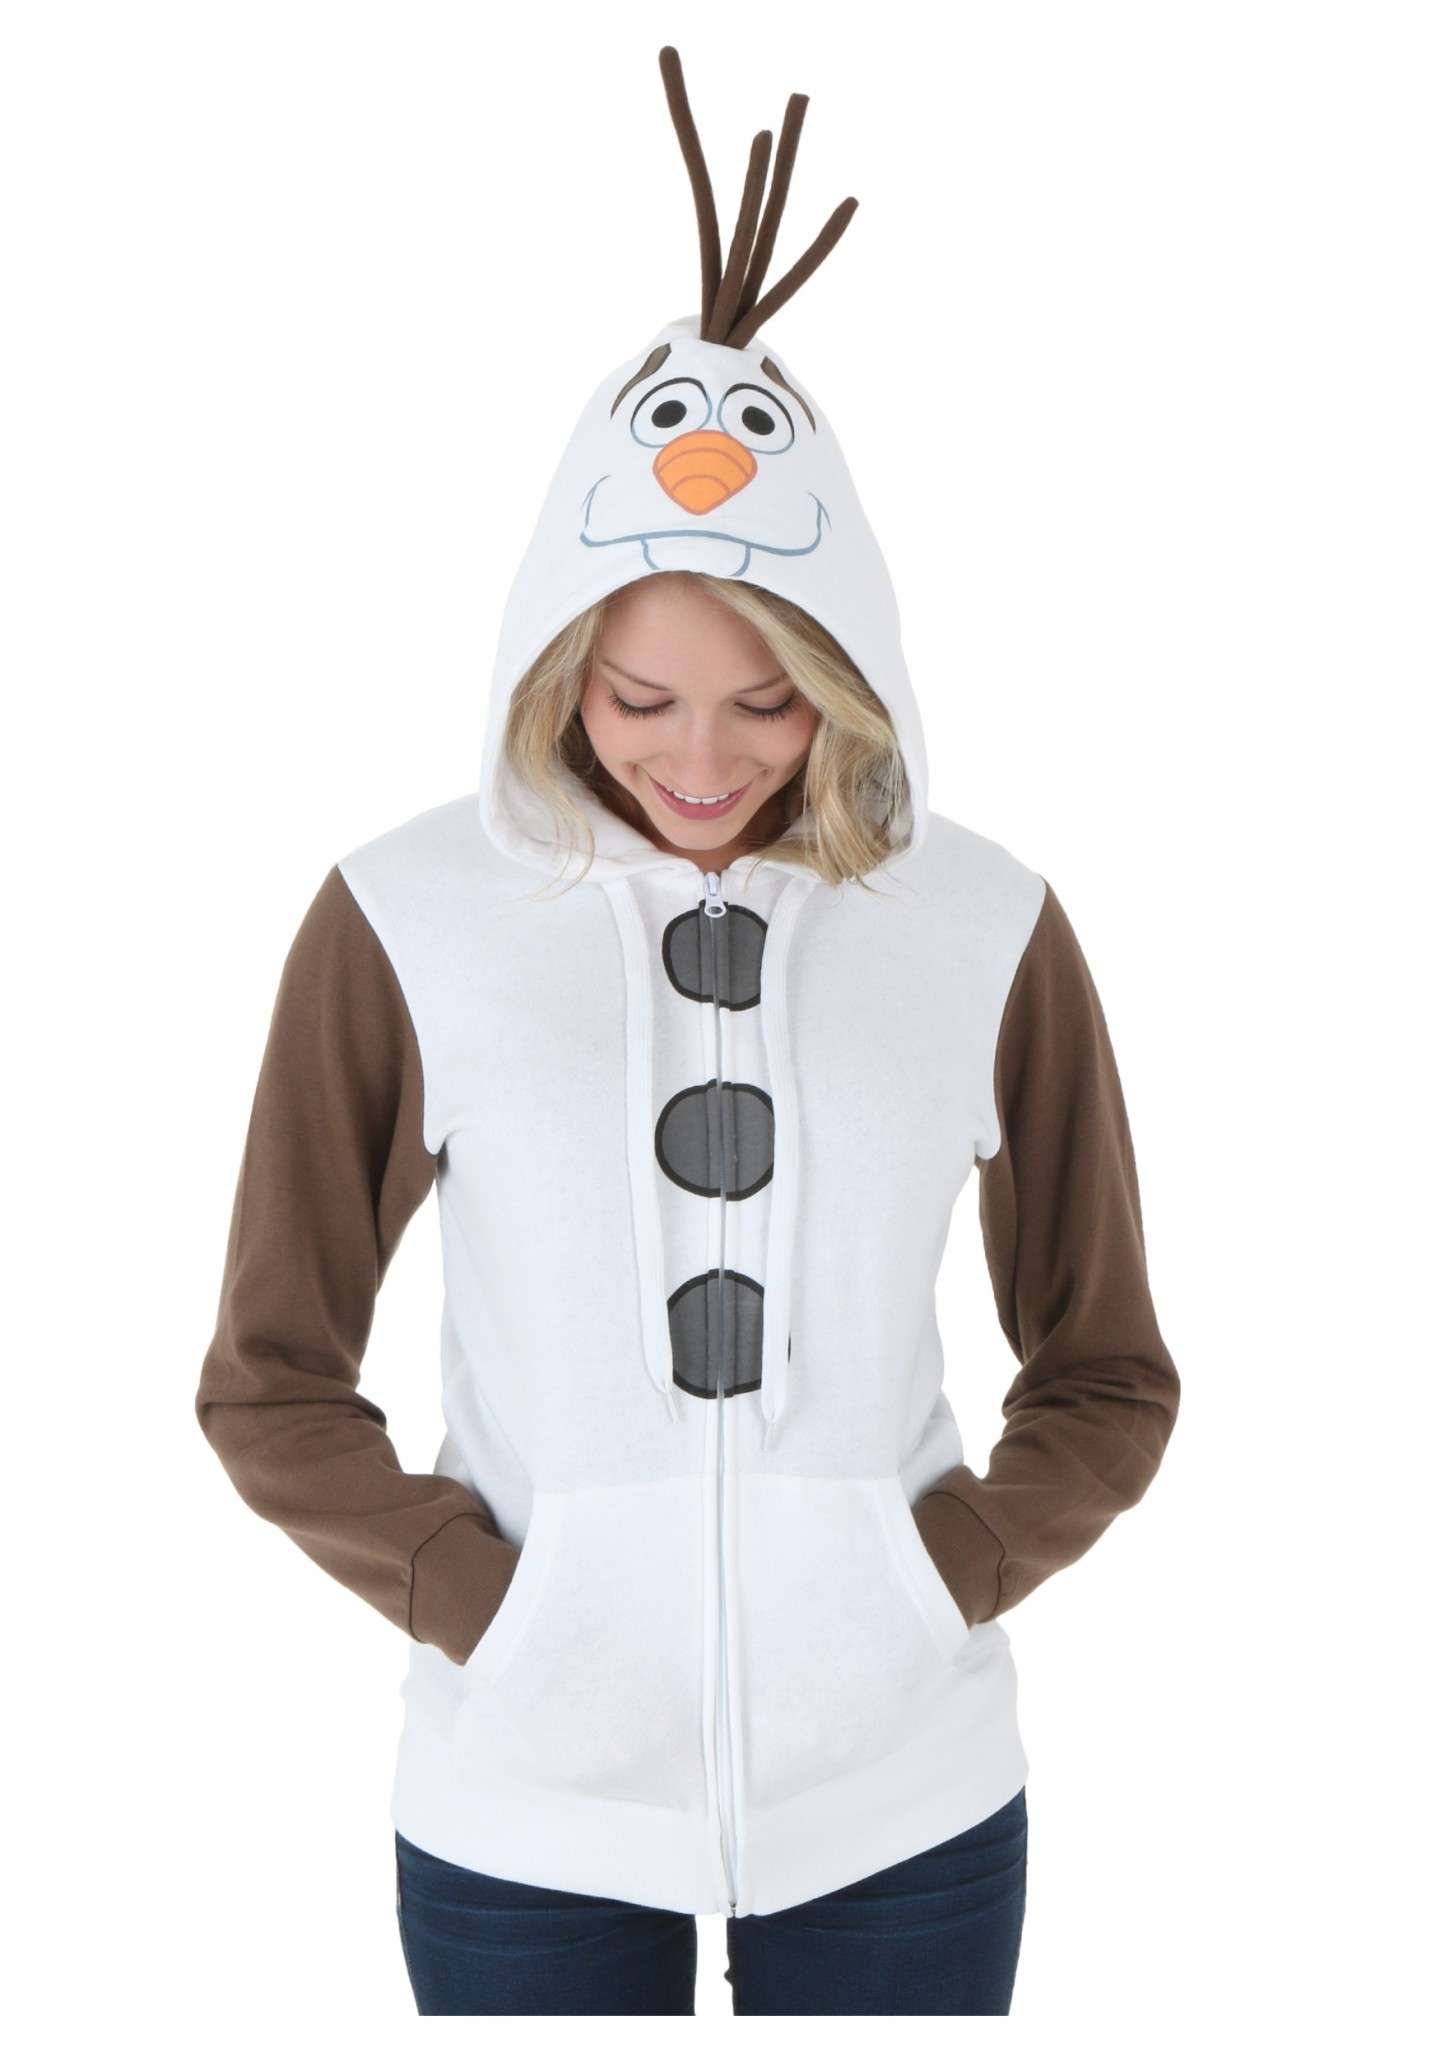 Costumi di Carnevale ispirati al cinema: Olaf di Frozen